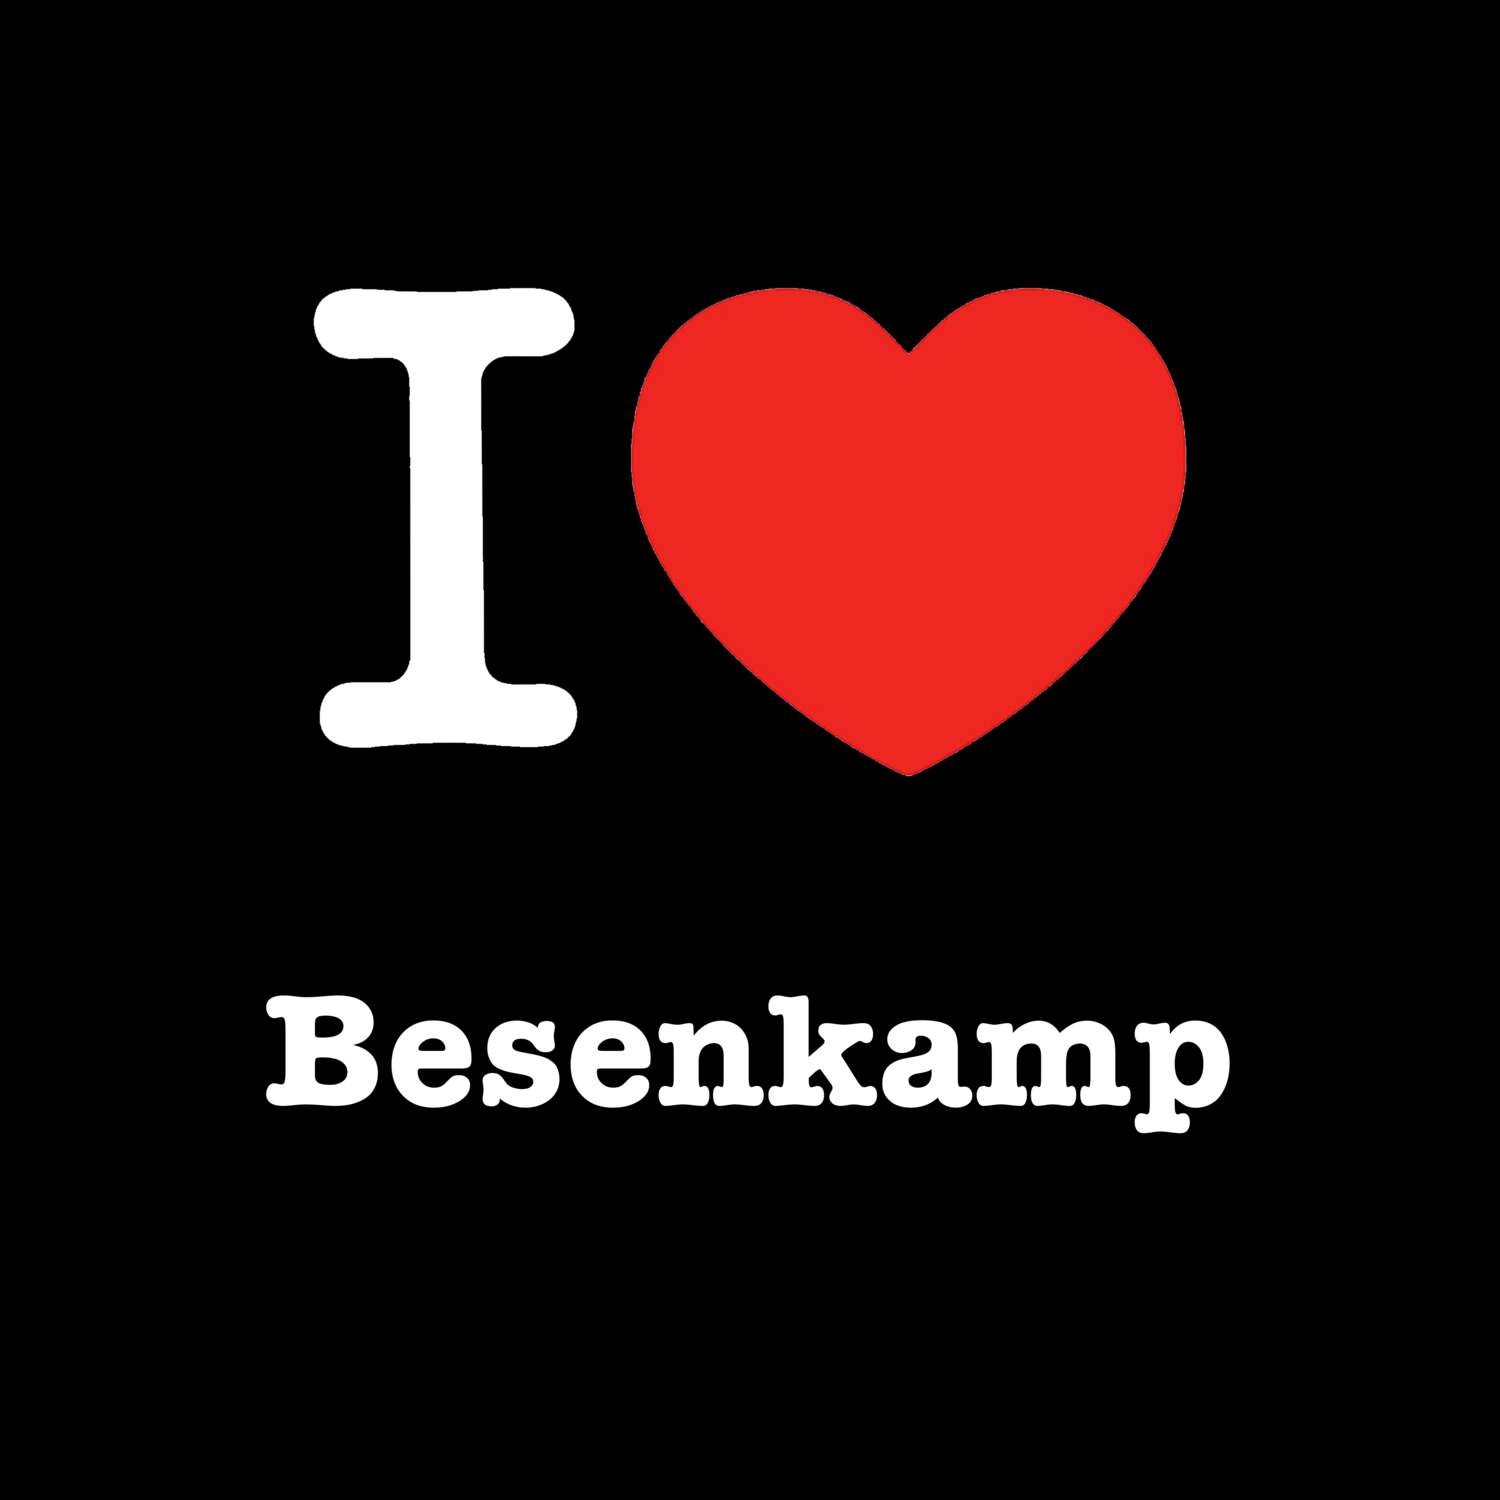 Besenkamp T-Shirt »I love«